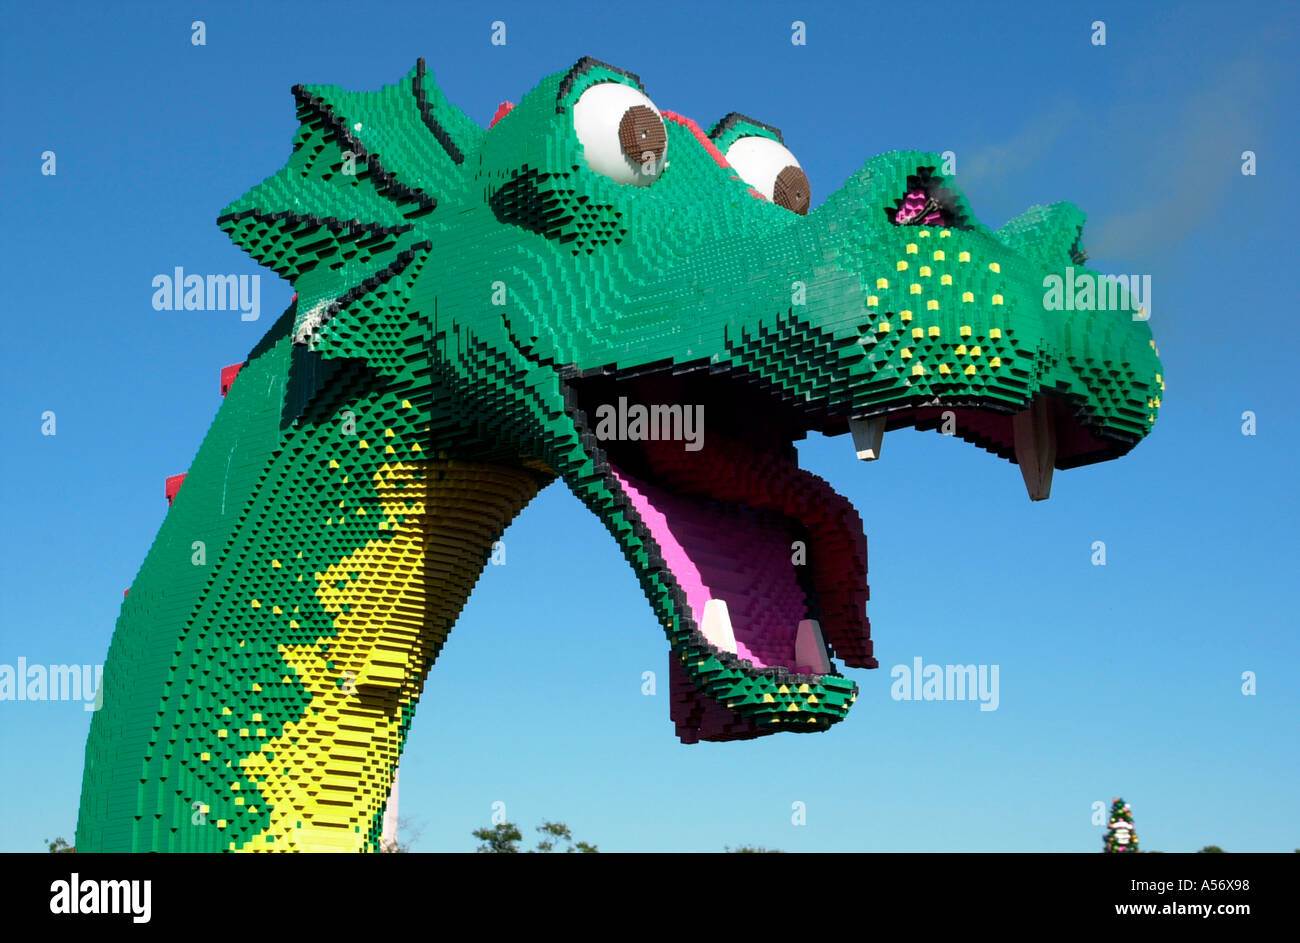 Brickley le serpent de mer de Lego, Marché, Downtown Disney, Lake Buena Vista, Orlando, Floride, USA Banque D'Images